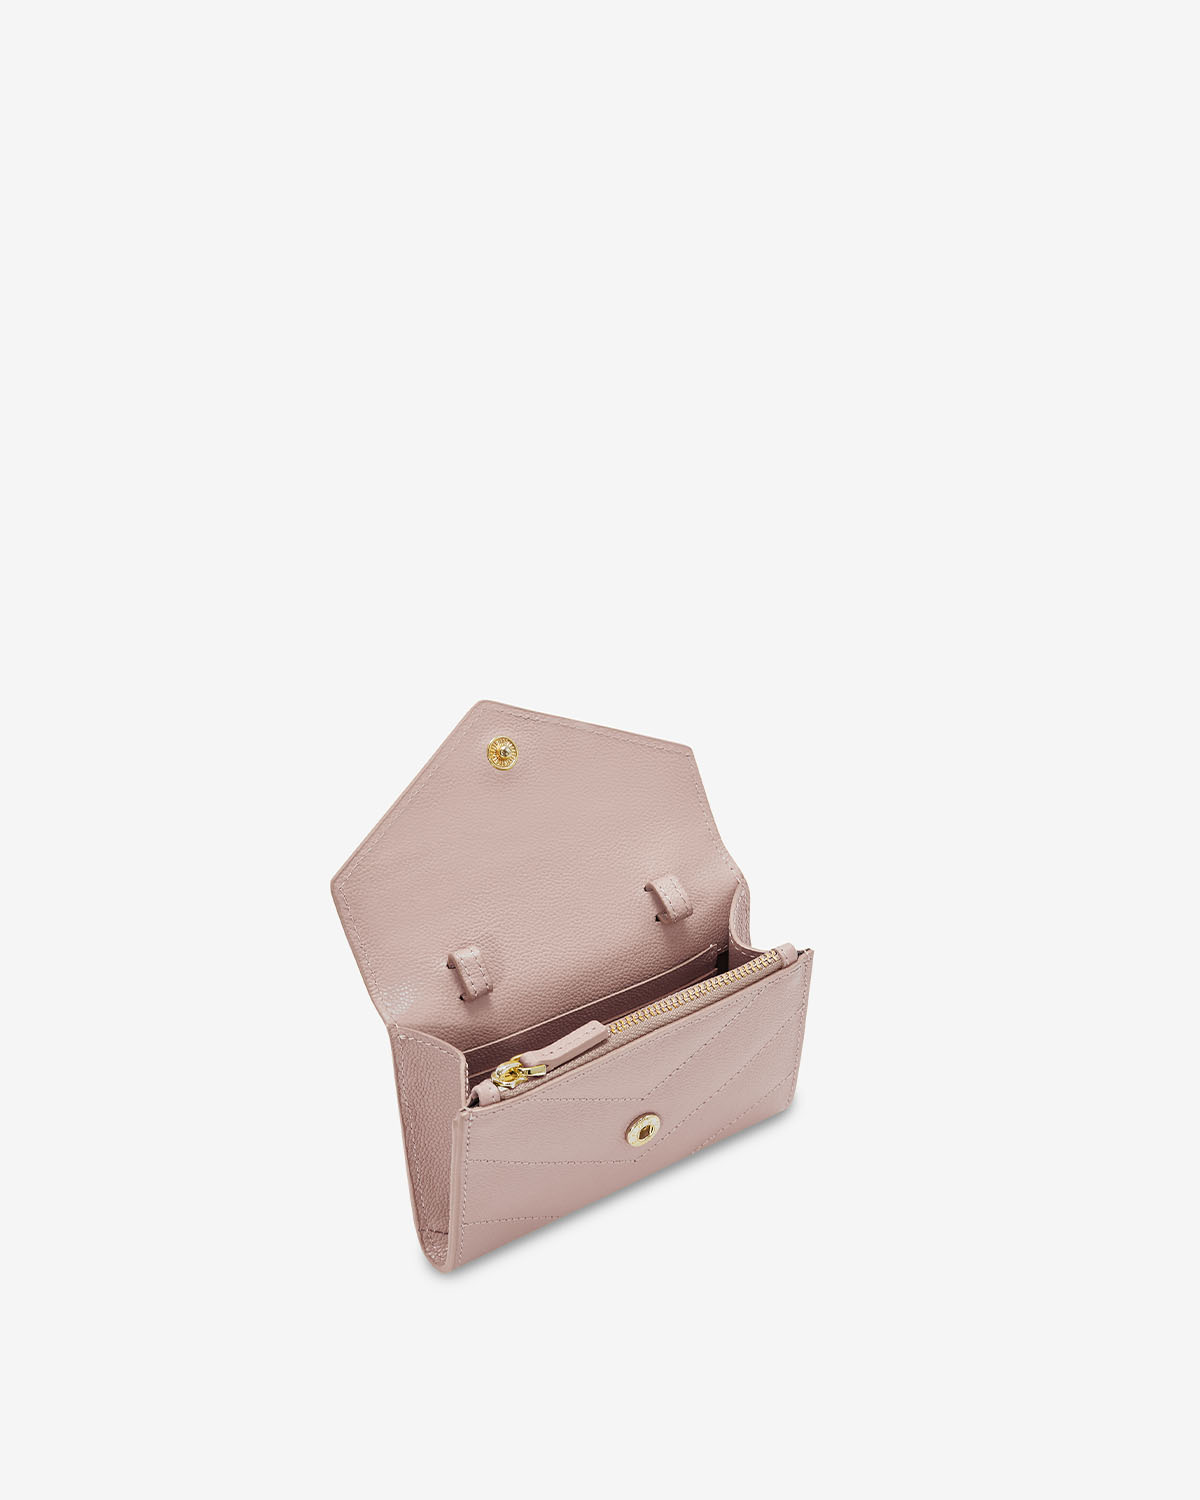 VERA CAVIAR Envelop Wallet in Rose Quartz กระเป๋าสตางค์ทรง envelop ทำจากหนังแท้ลาย Caviar สี Rose Quartz